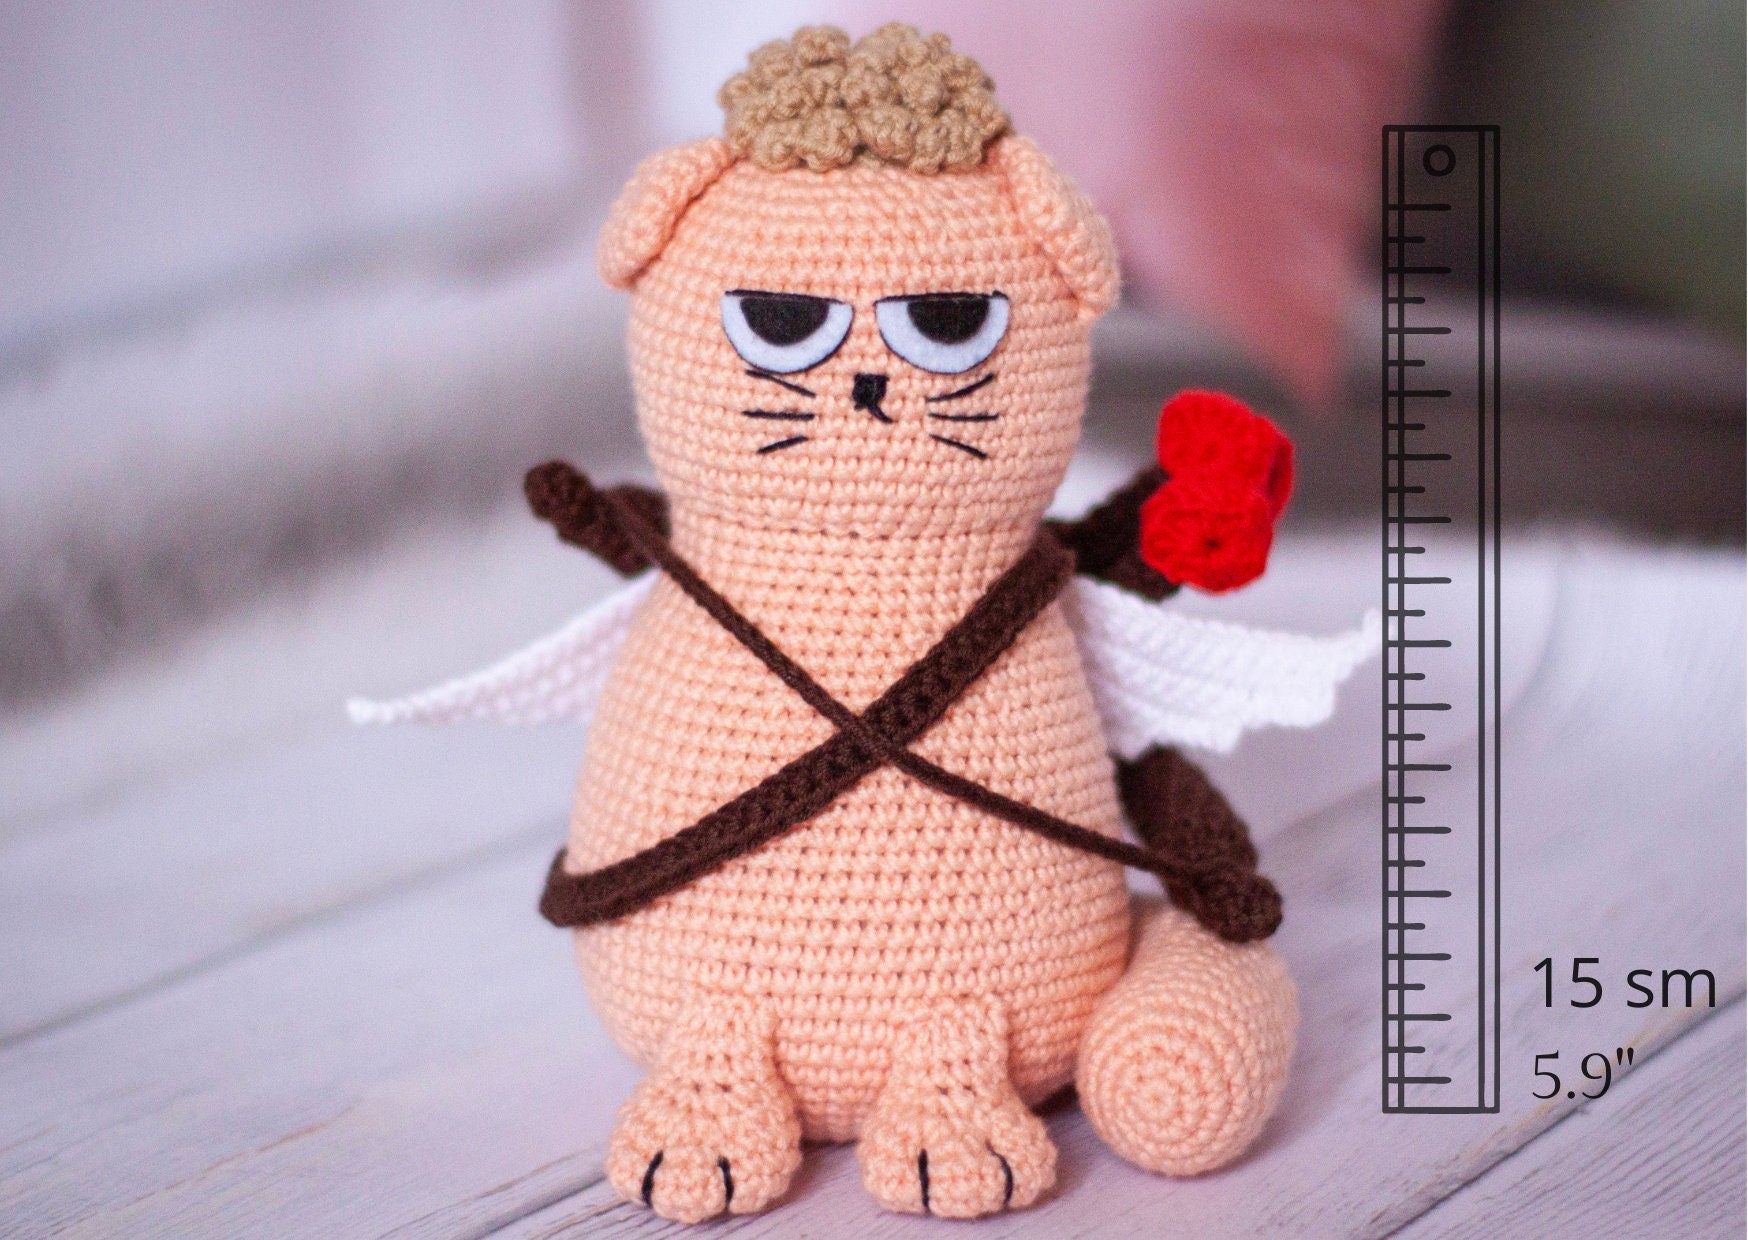 Crochet patterns Valentine's gift amigurumi Cupid Cat PDF / Instant Download tutorial